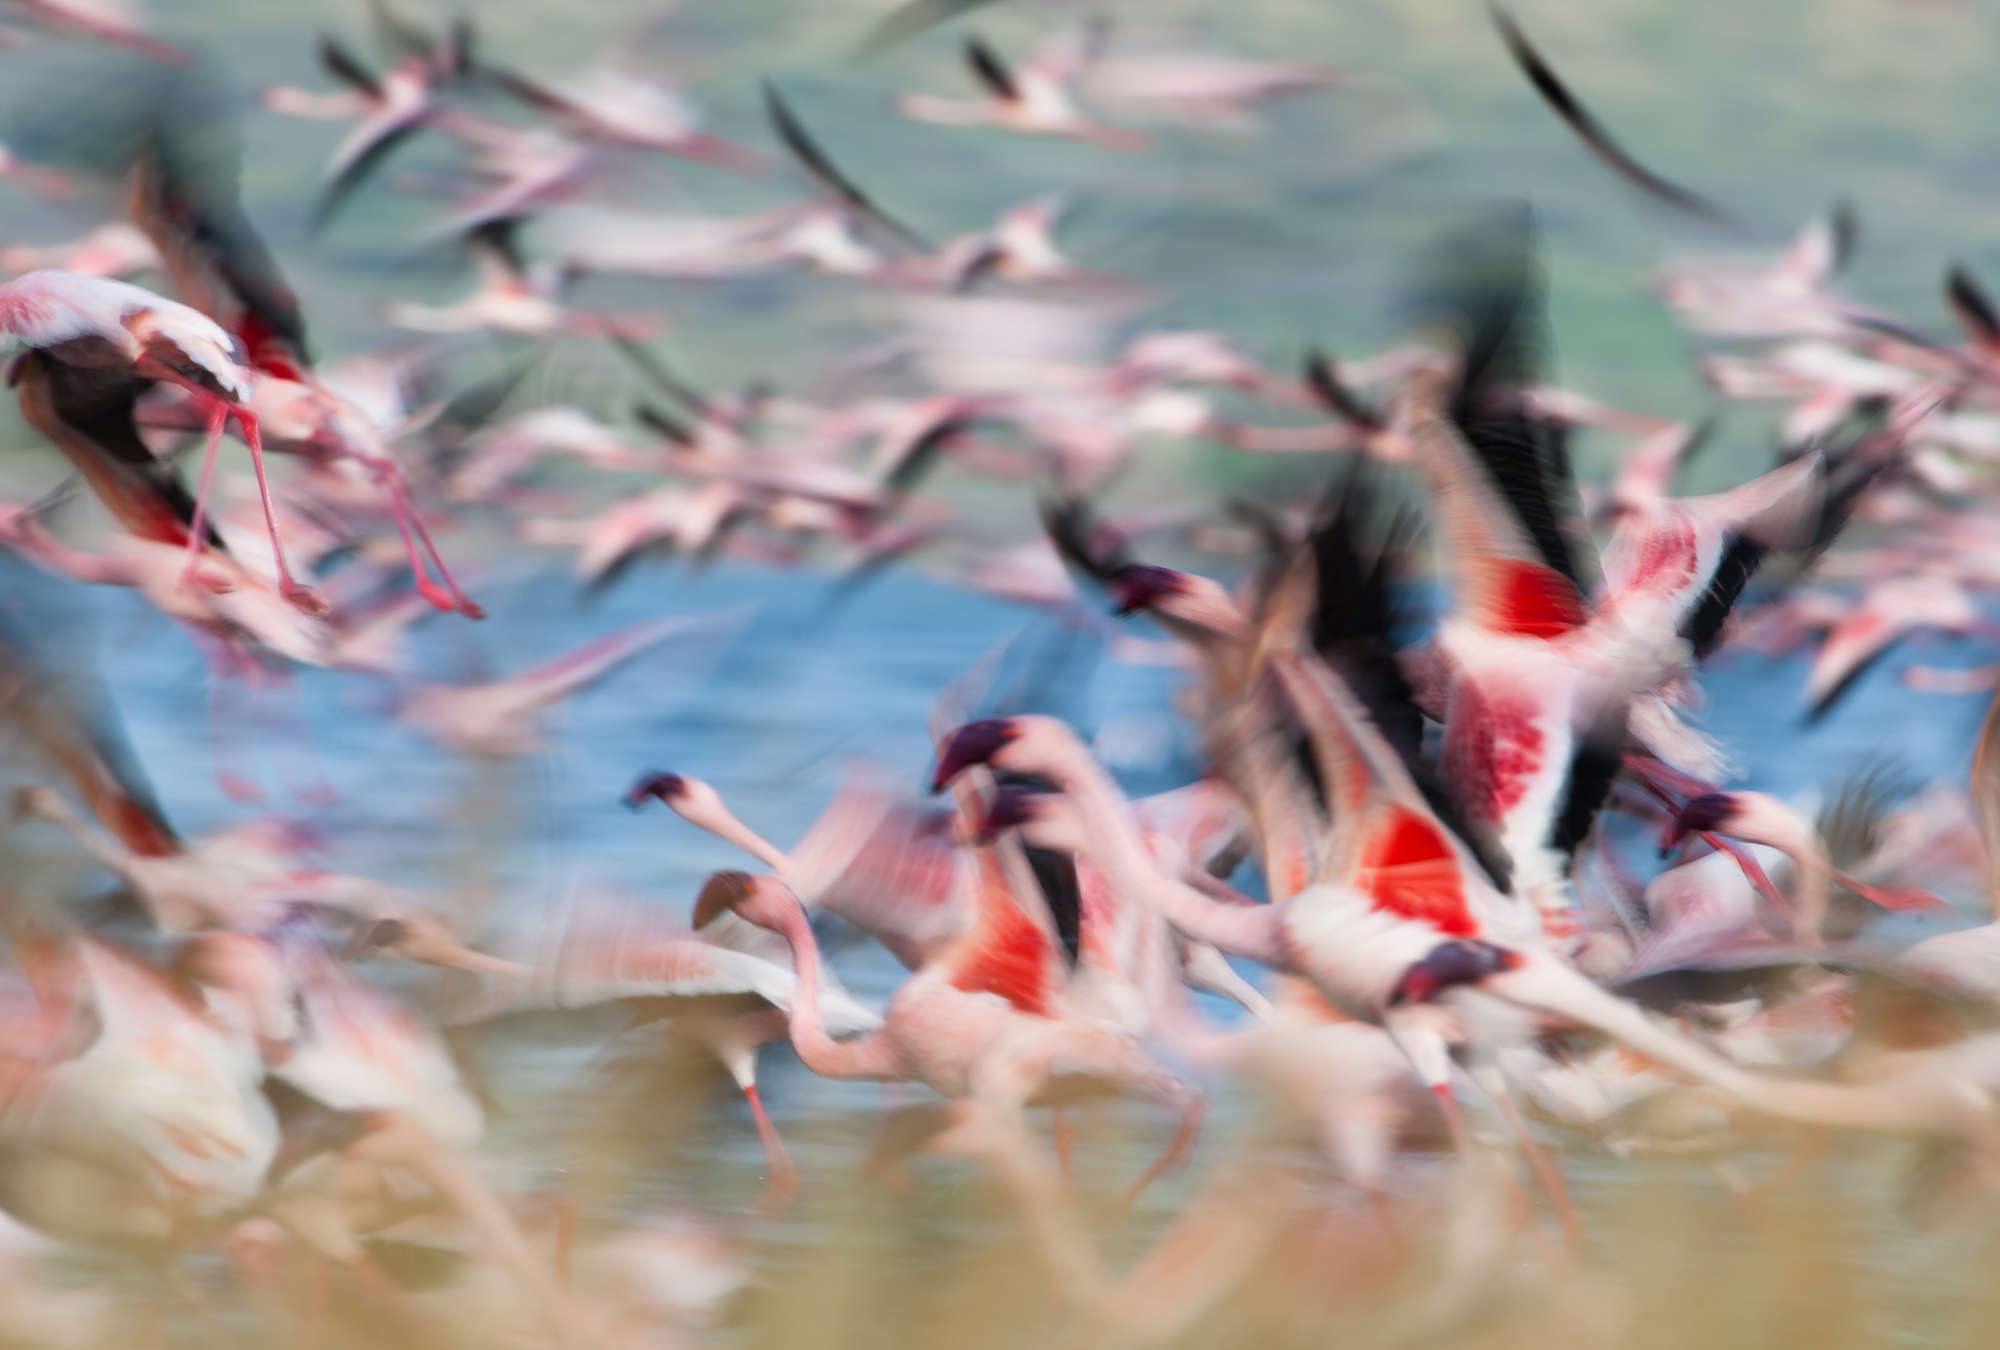             Photo wallpaper flamingos at flight takeoff
        